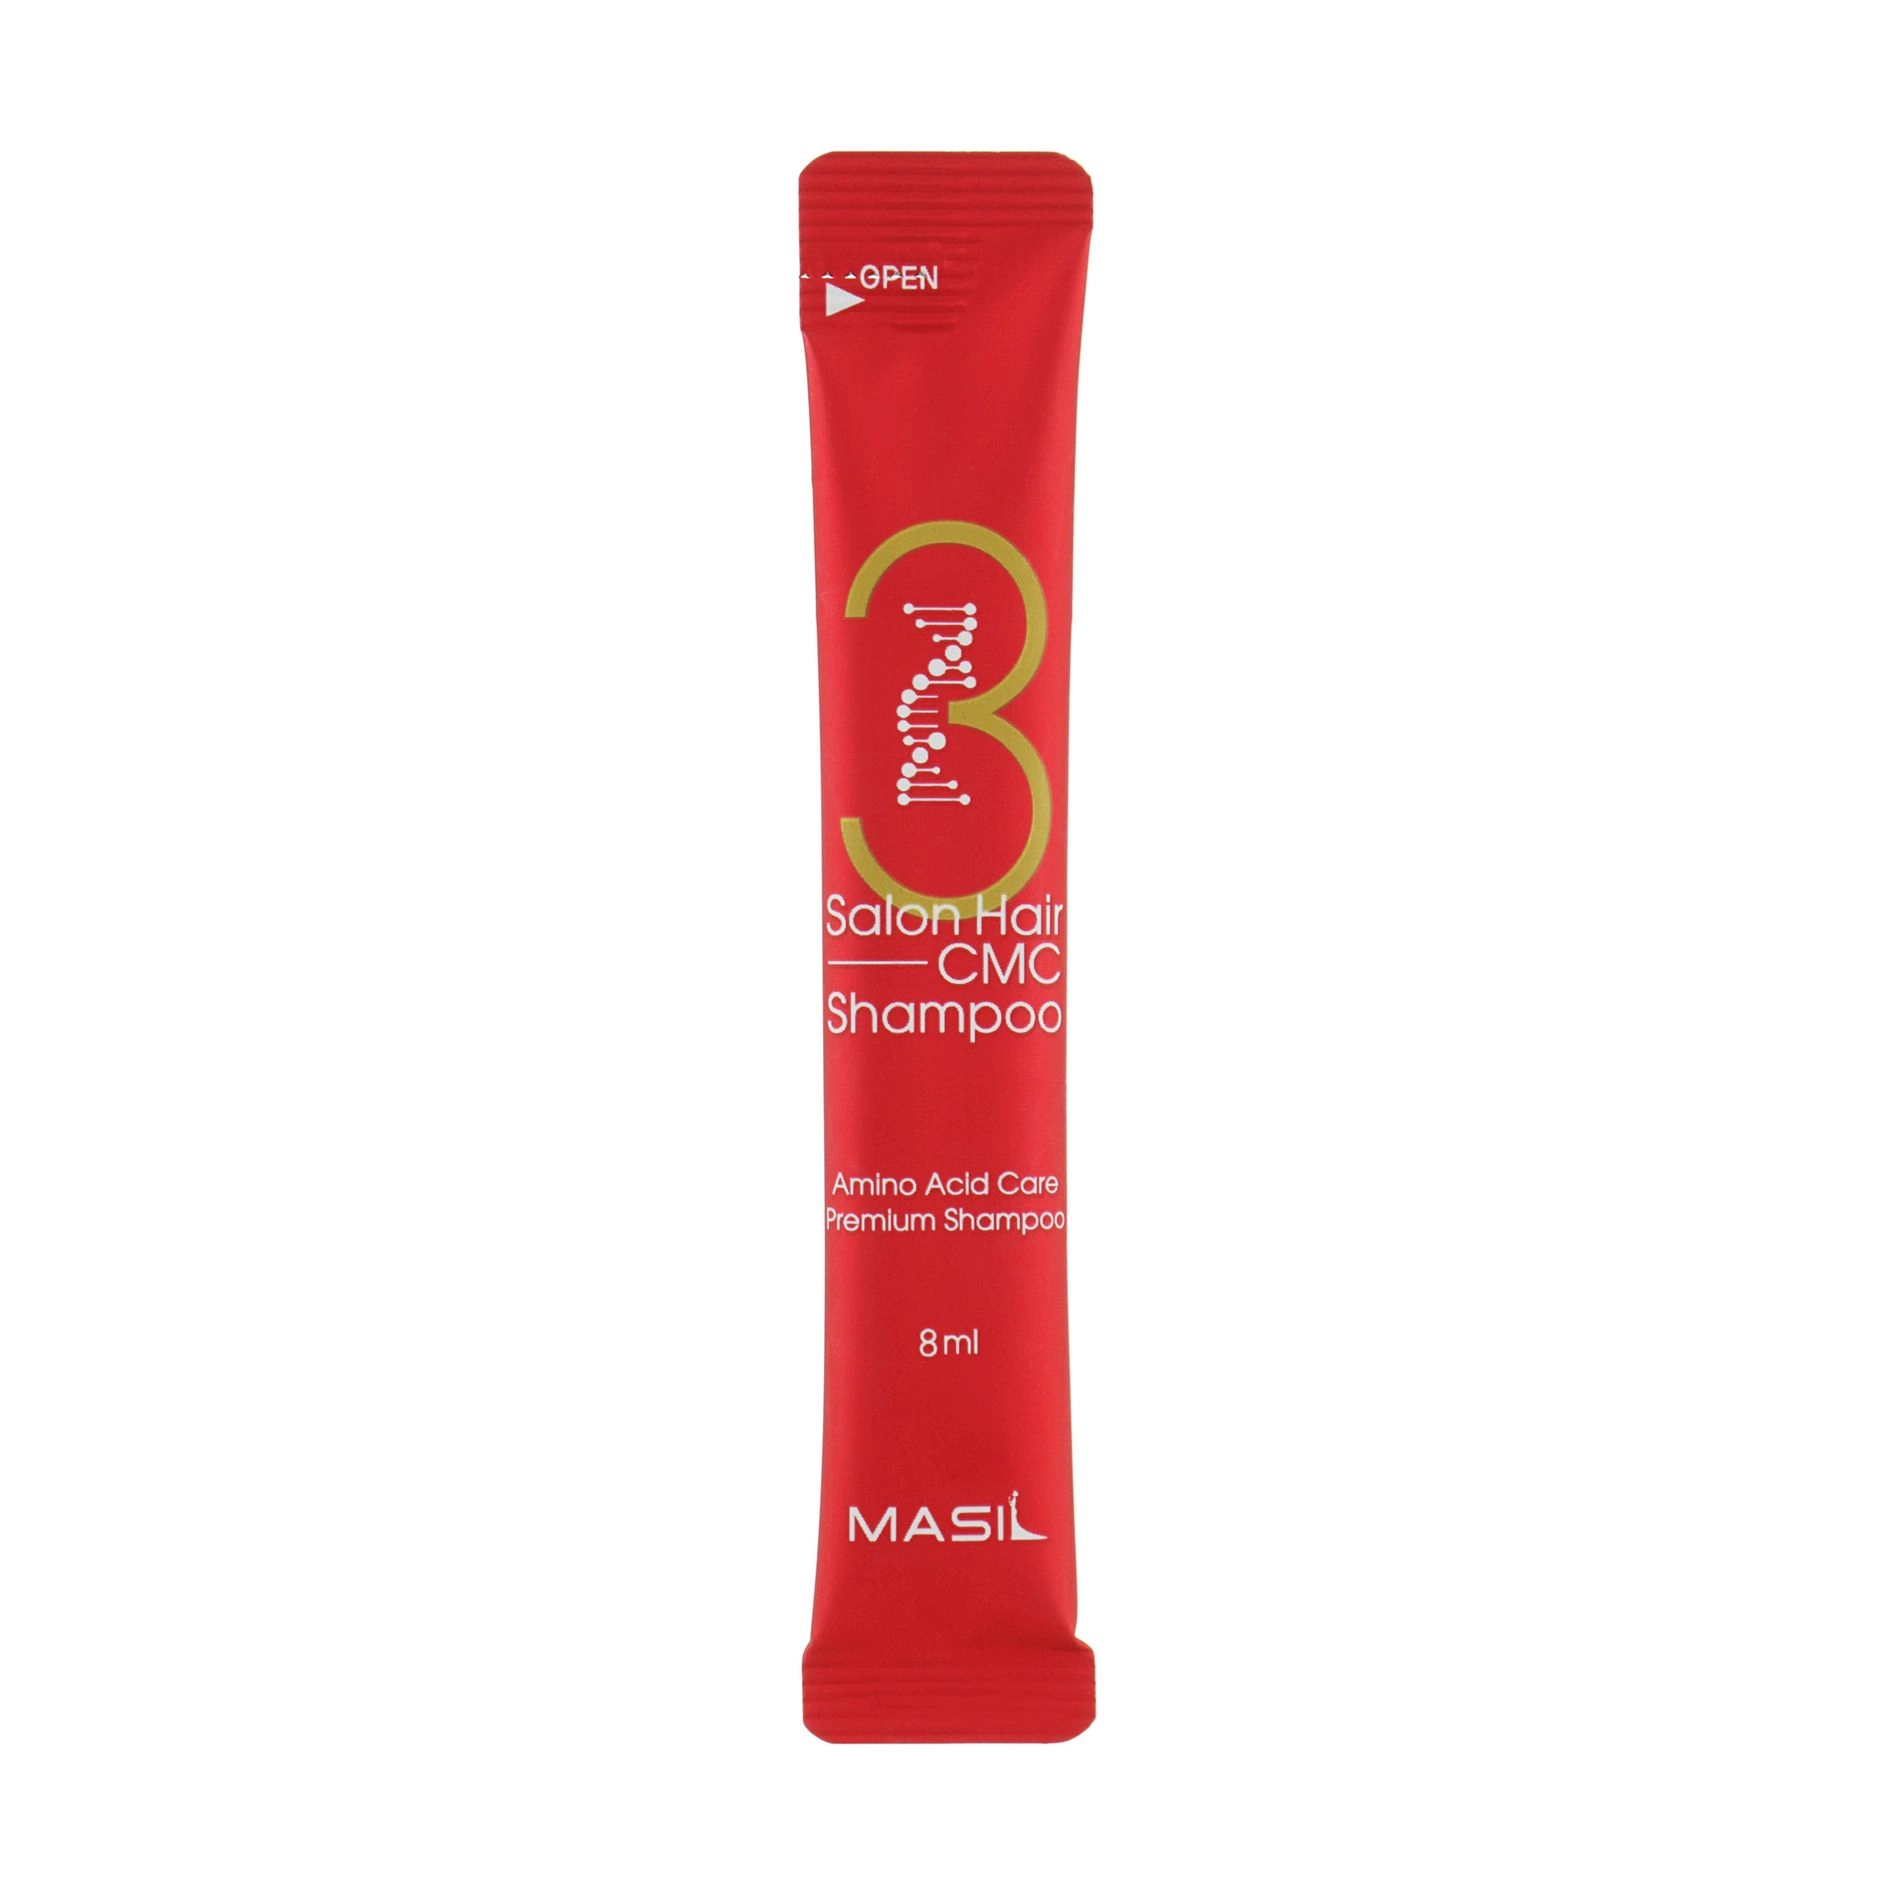 Восстанавливающий шампунь с керамидами и аминокислотами для поврежденных волос - Masil 3 Salon Hair CMC Shampoo, 20x8 мл - фото N2